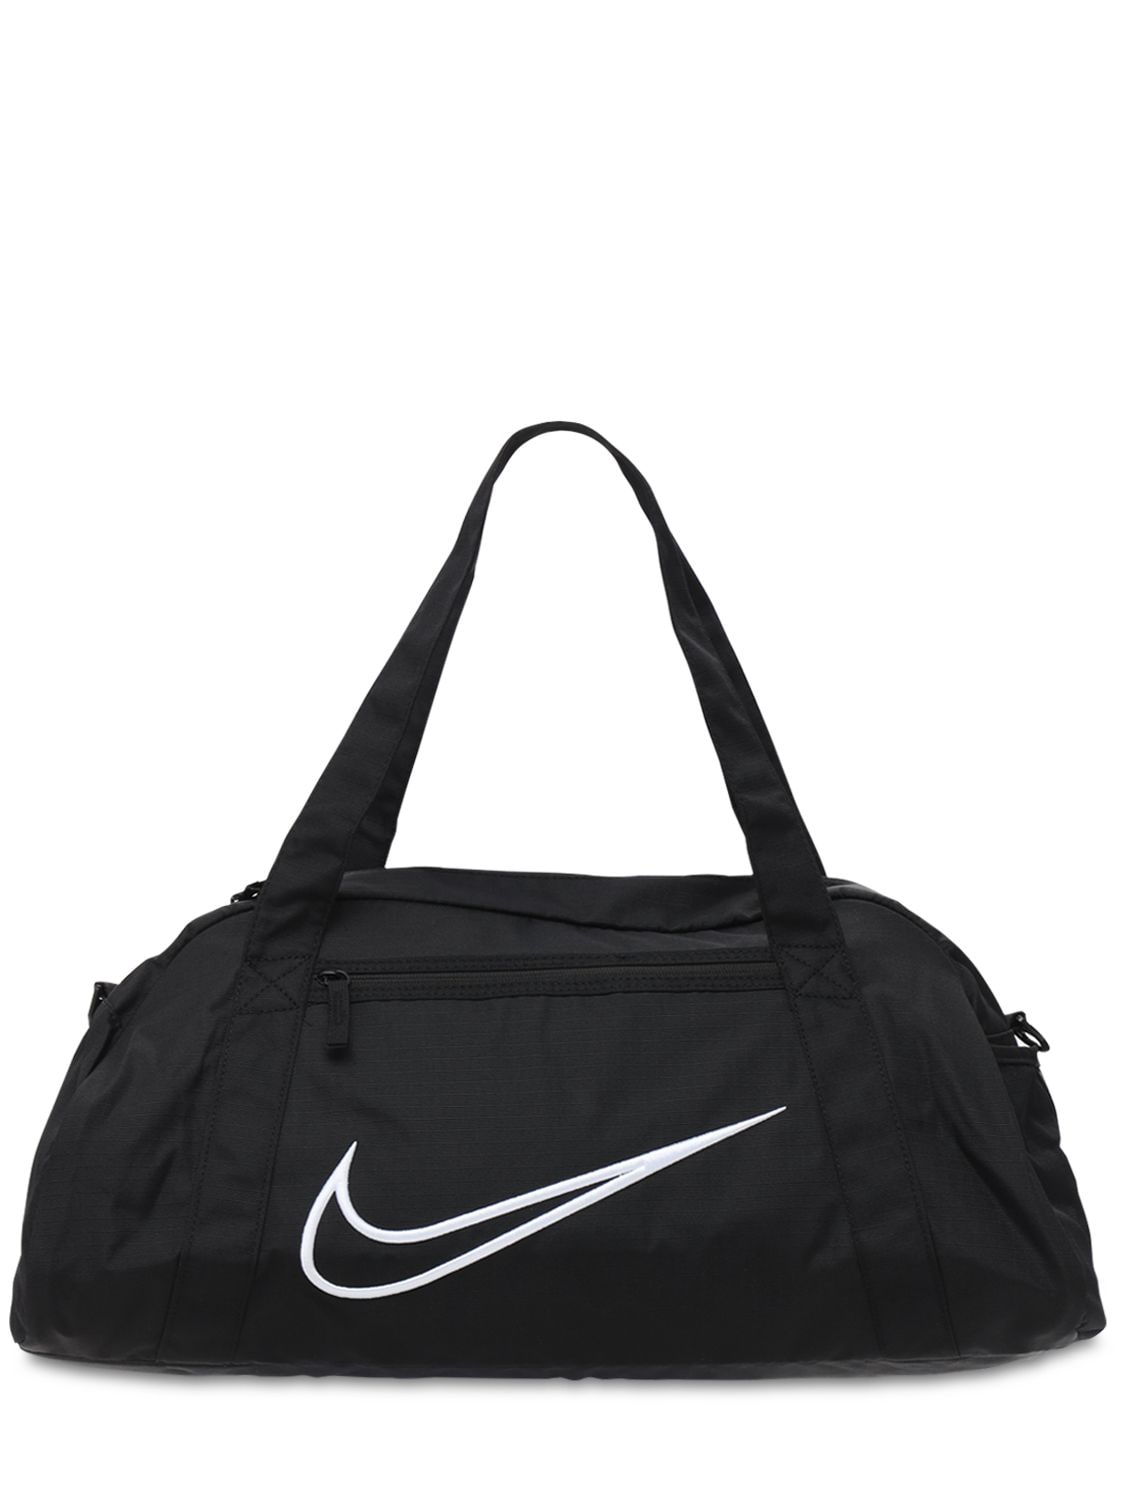 Nike Training Duffle Bag In Black